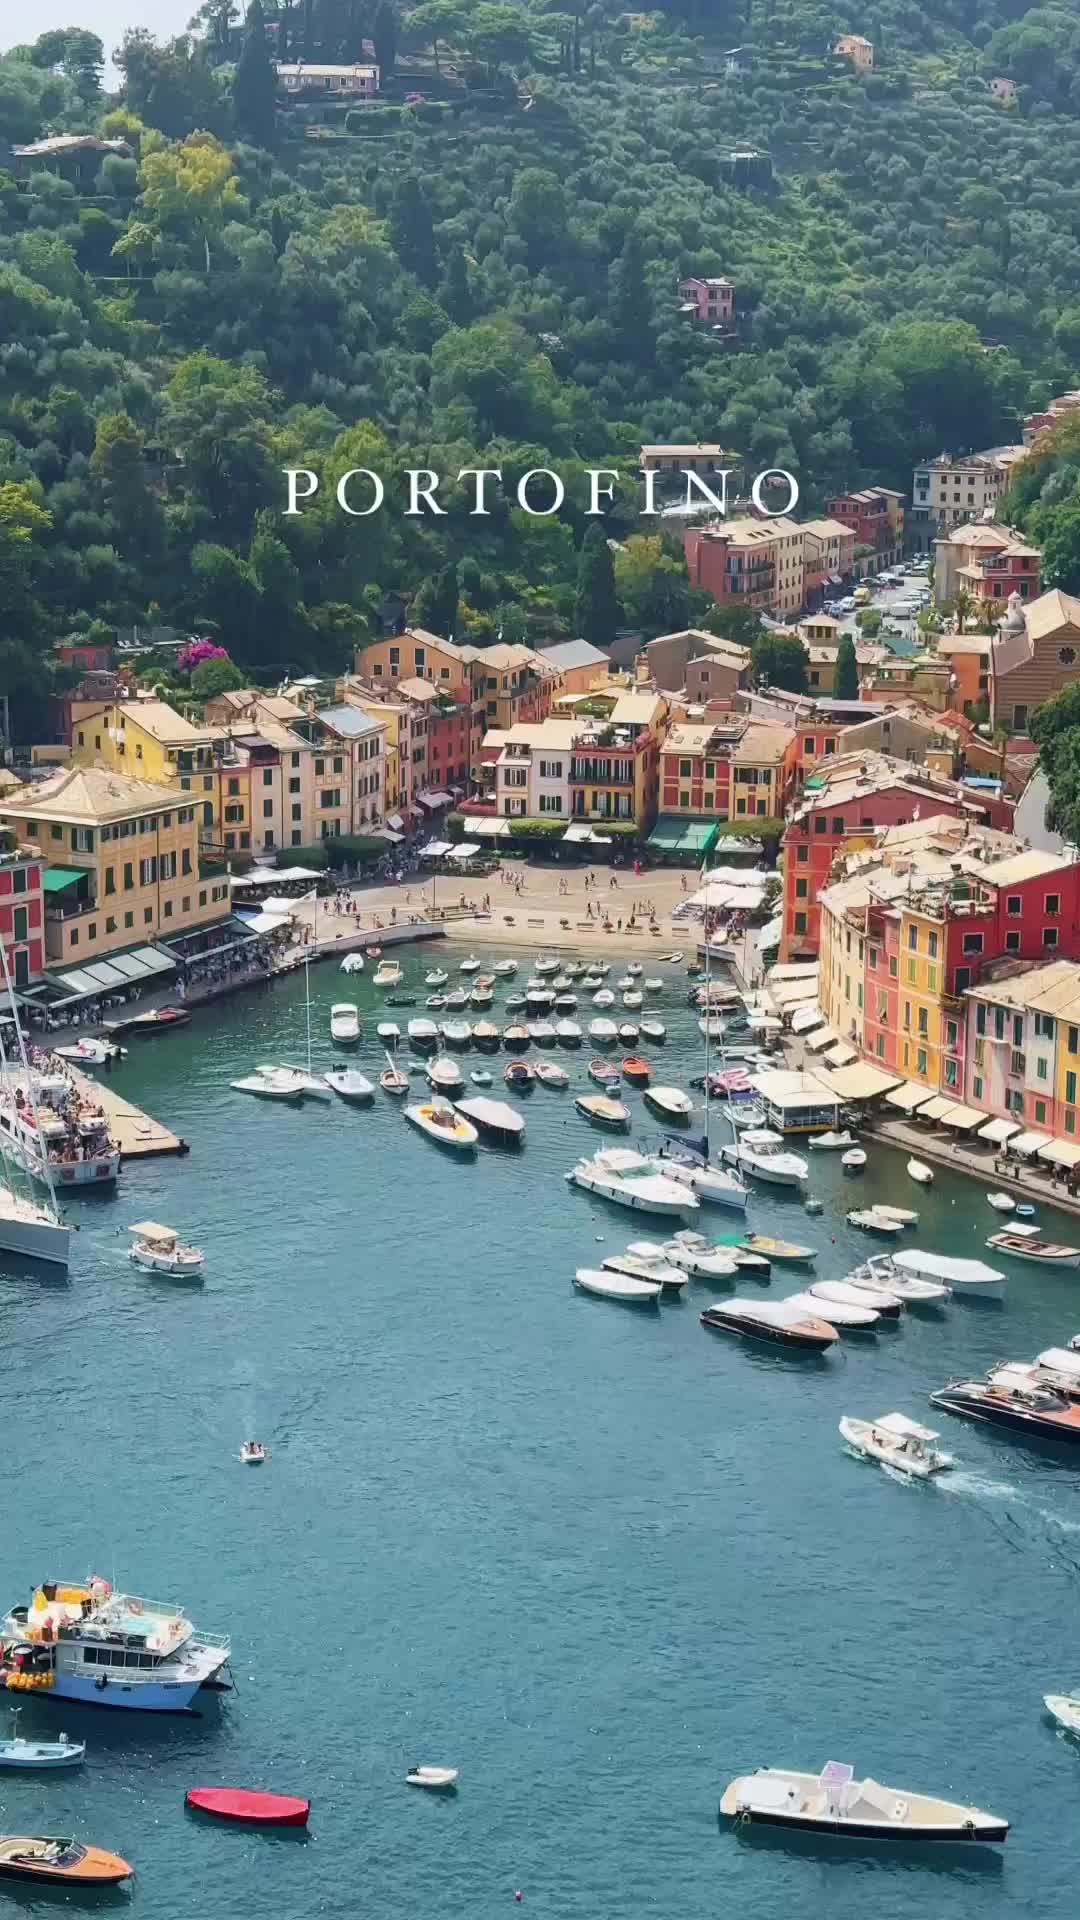 The pearl of Tigullio ✨💙

#Portofino #Liguria #Italia #Italy